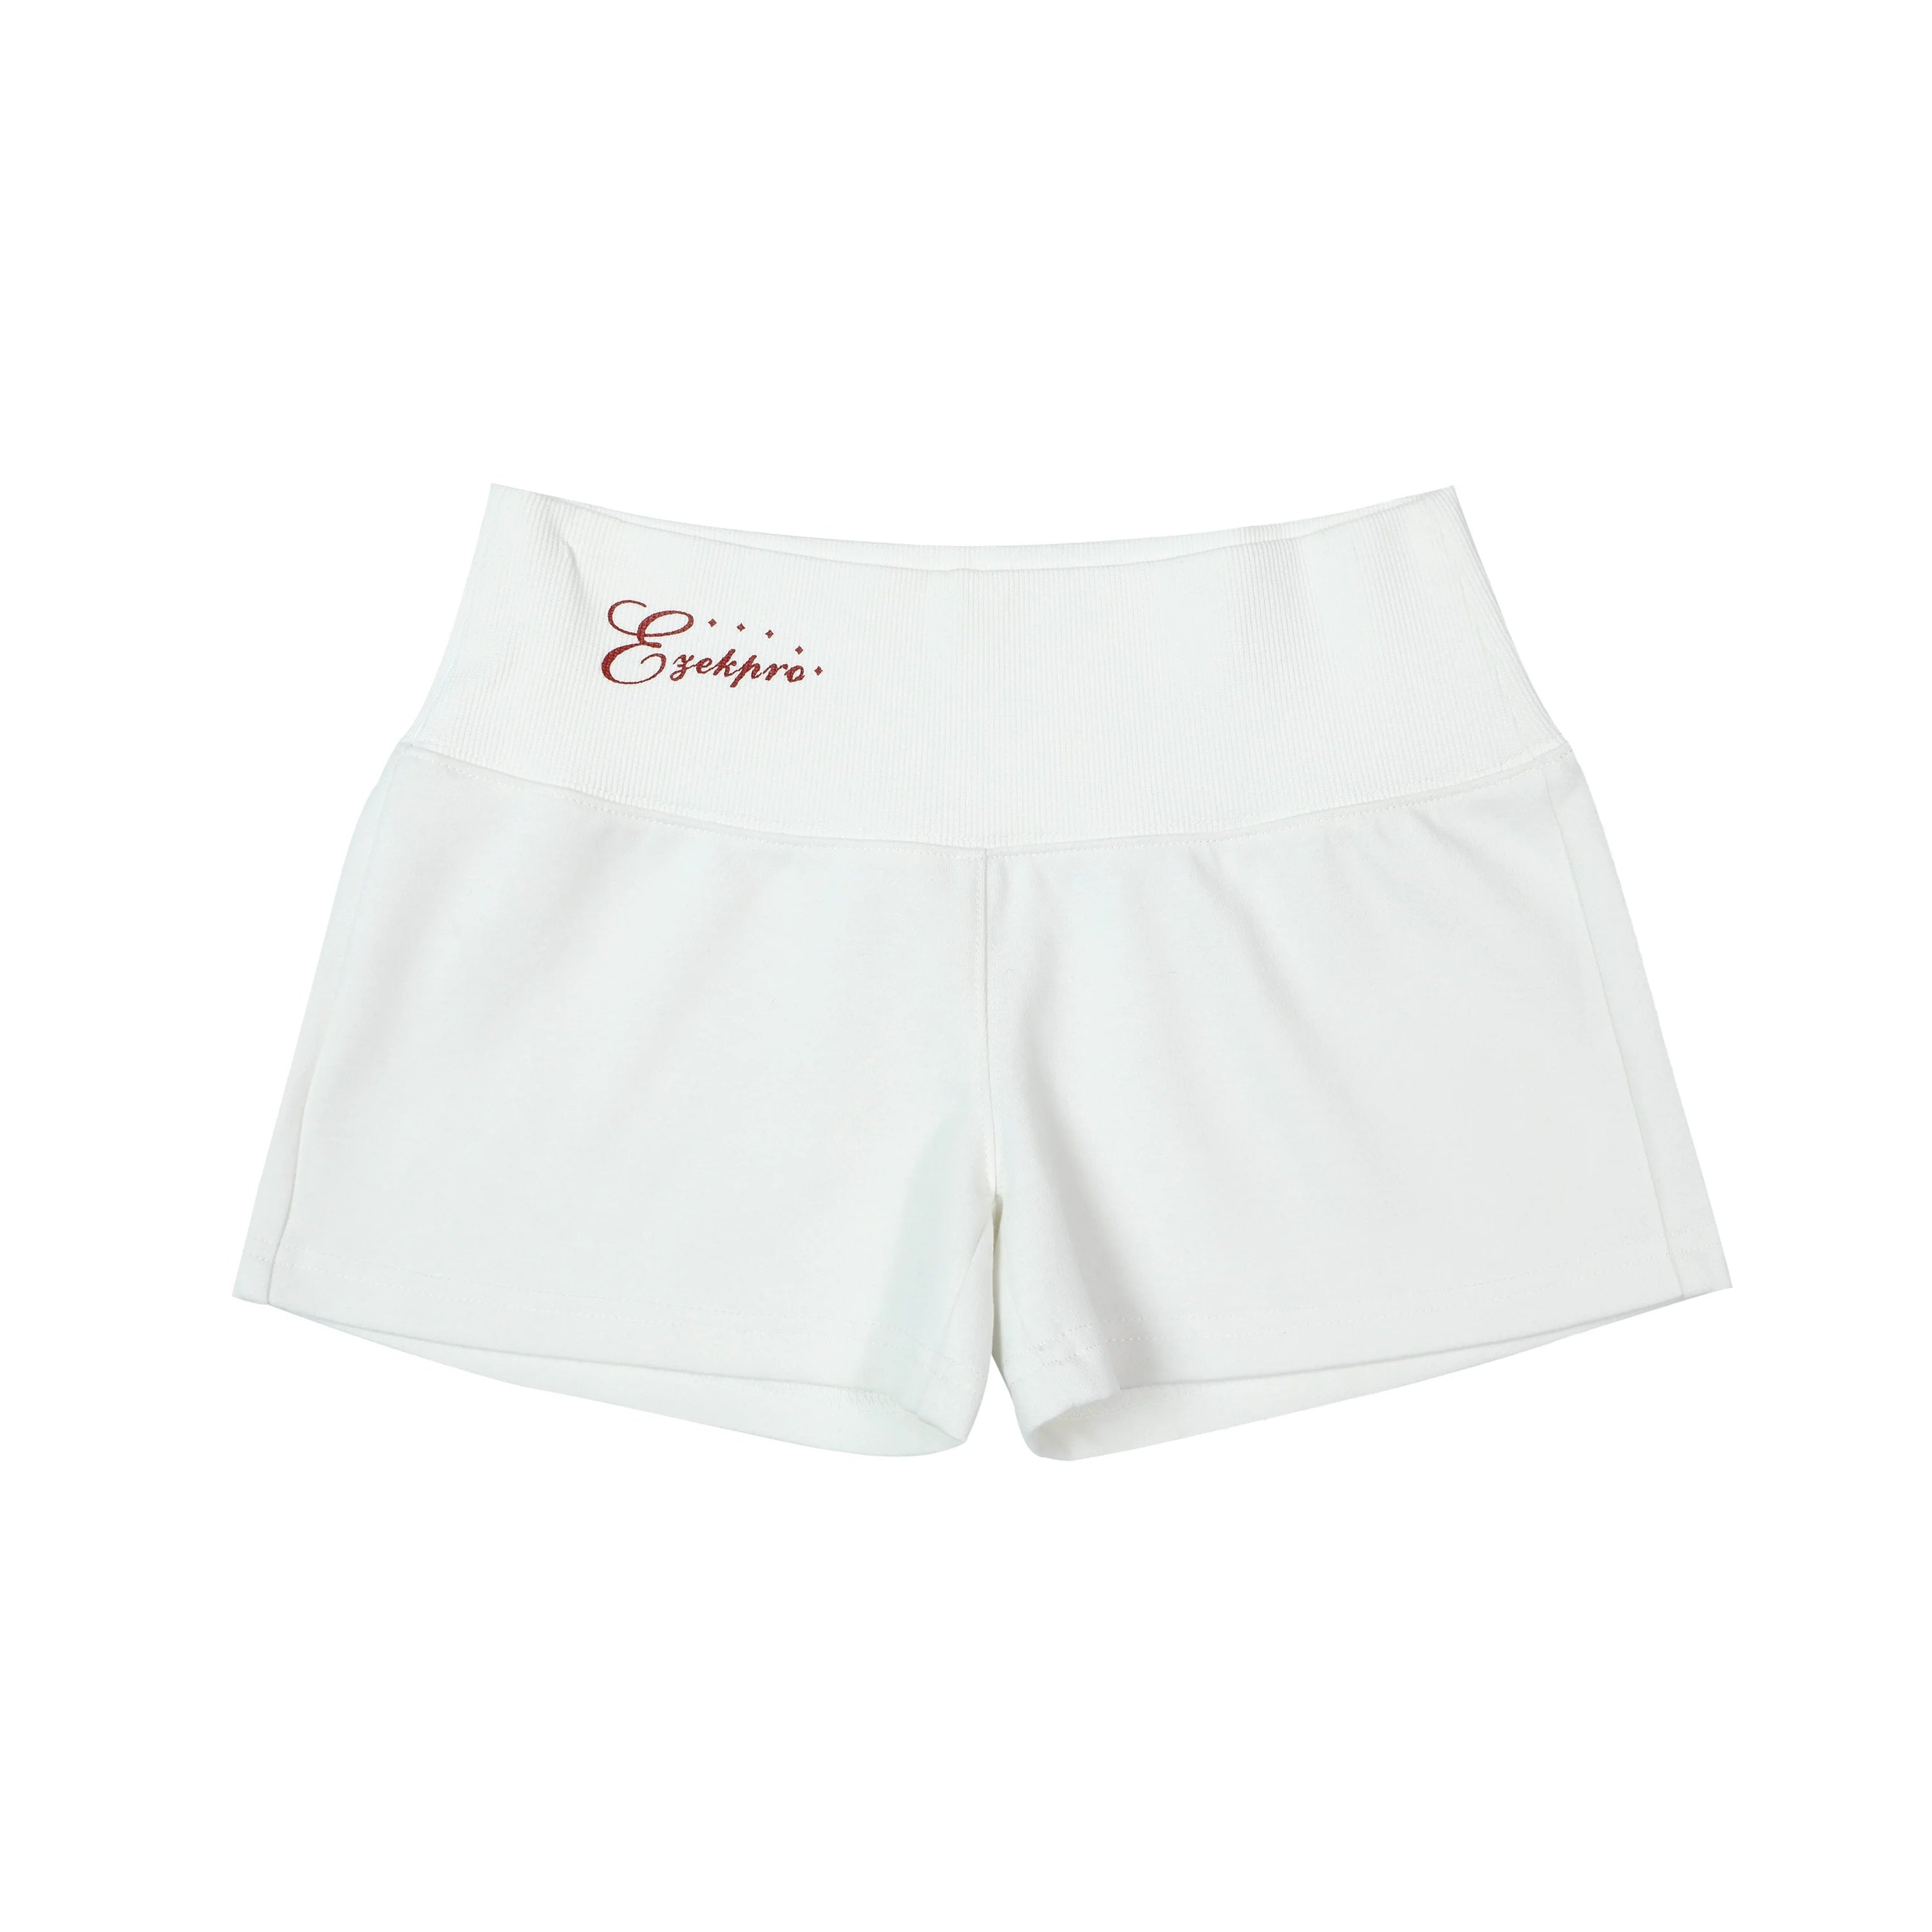 Simplicity Style Street Shorts Pants - chiclara